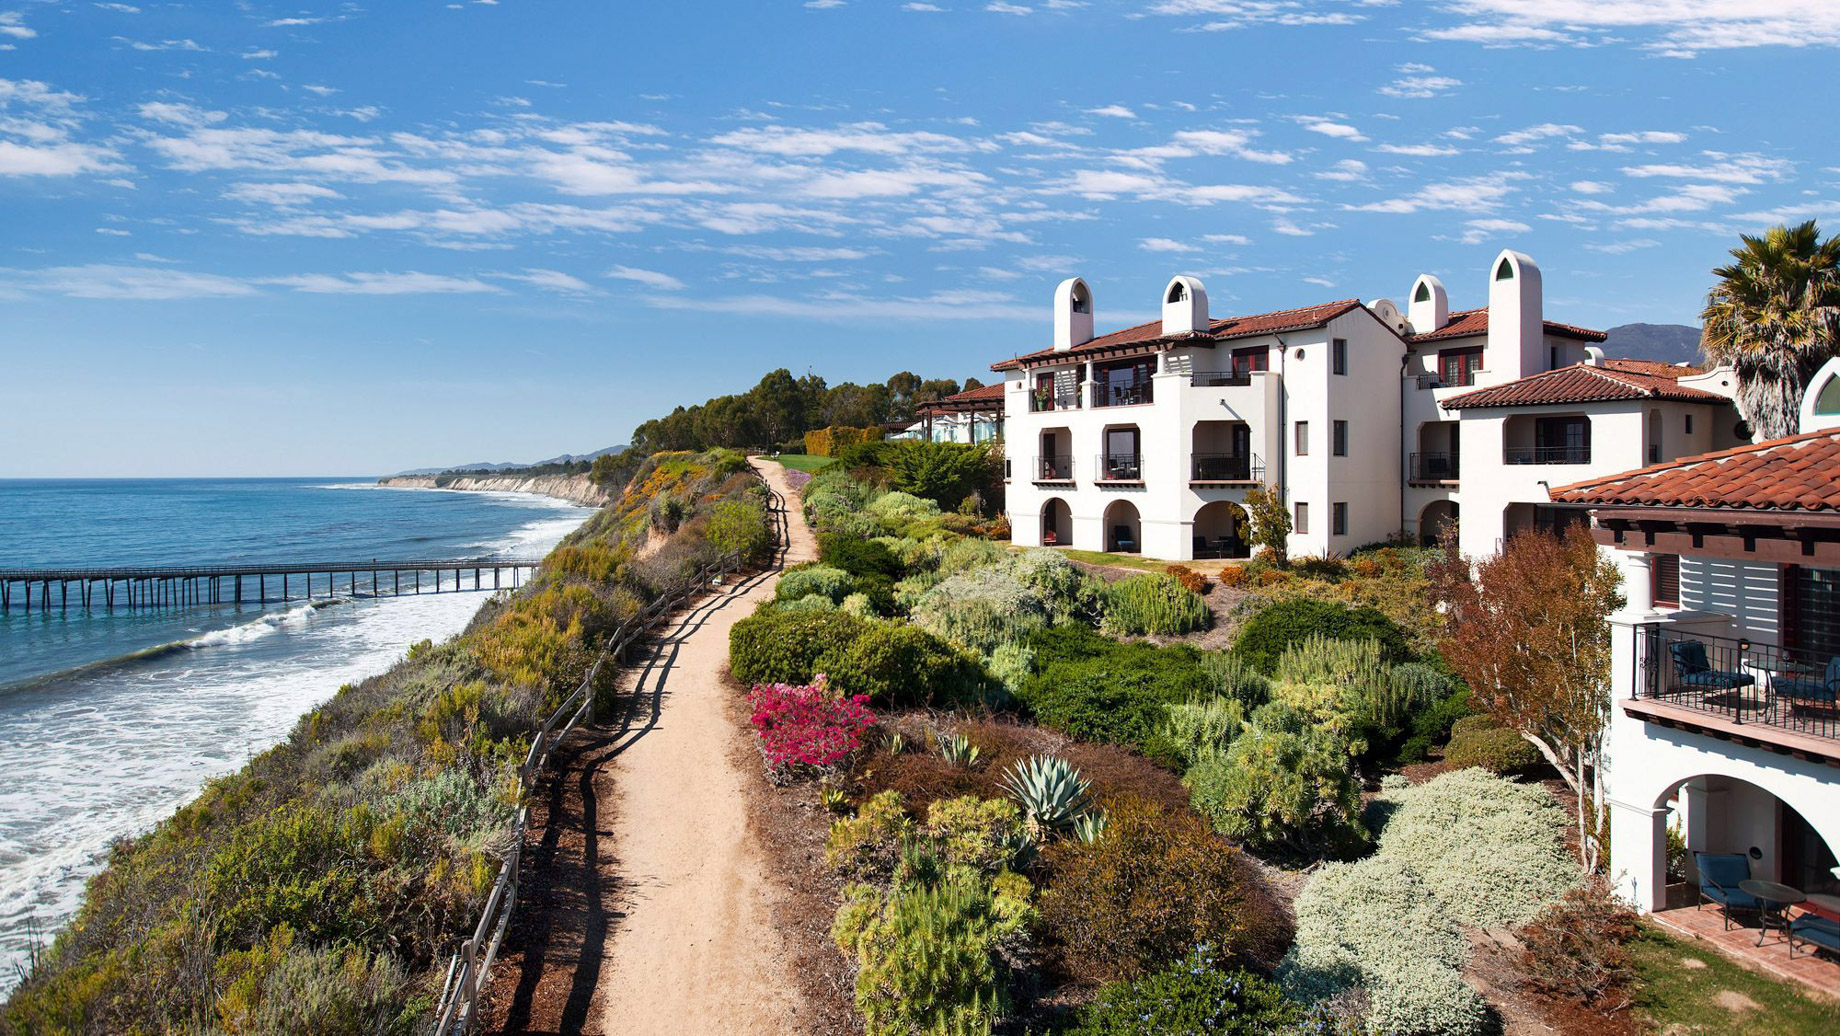 The Ritz-Carlton Bacara, Santa Barbara Resort - Santa Barbara, CA, USA - Bacara Ocean View